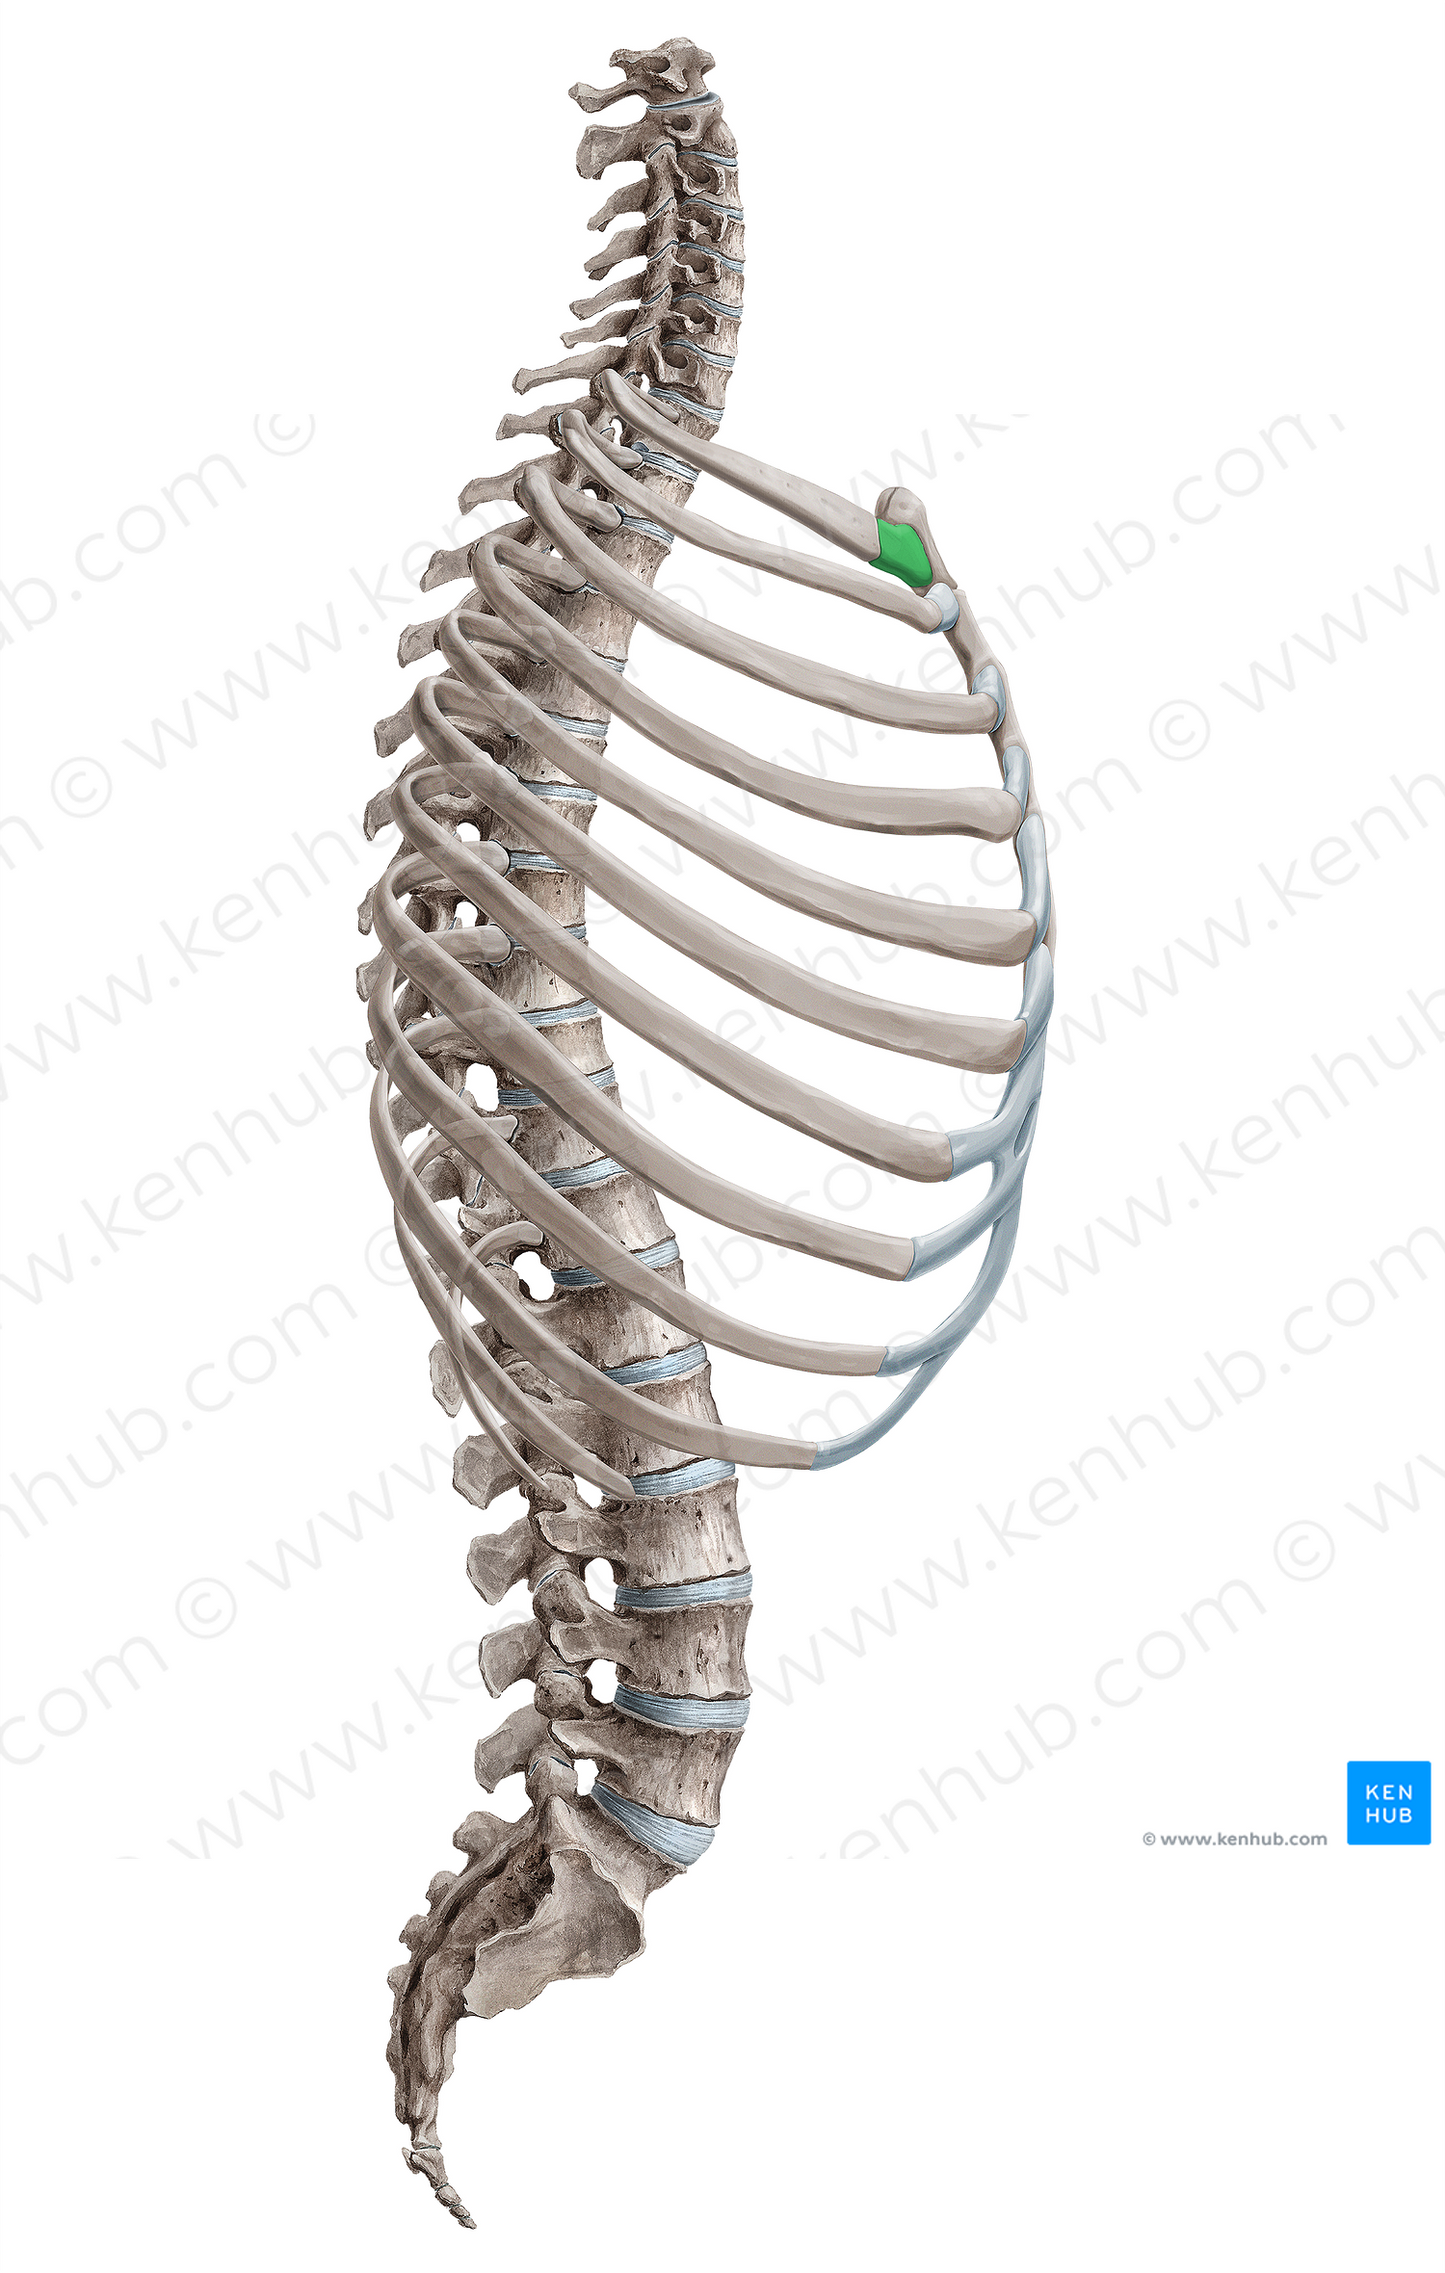 Costal cartilage of 1st rib (#18151)